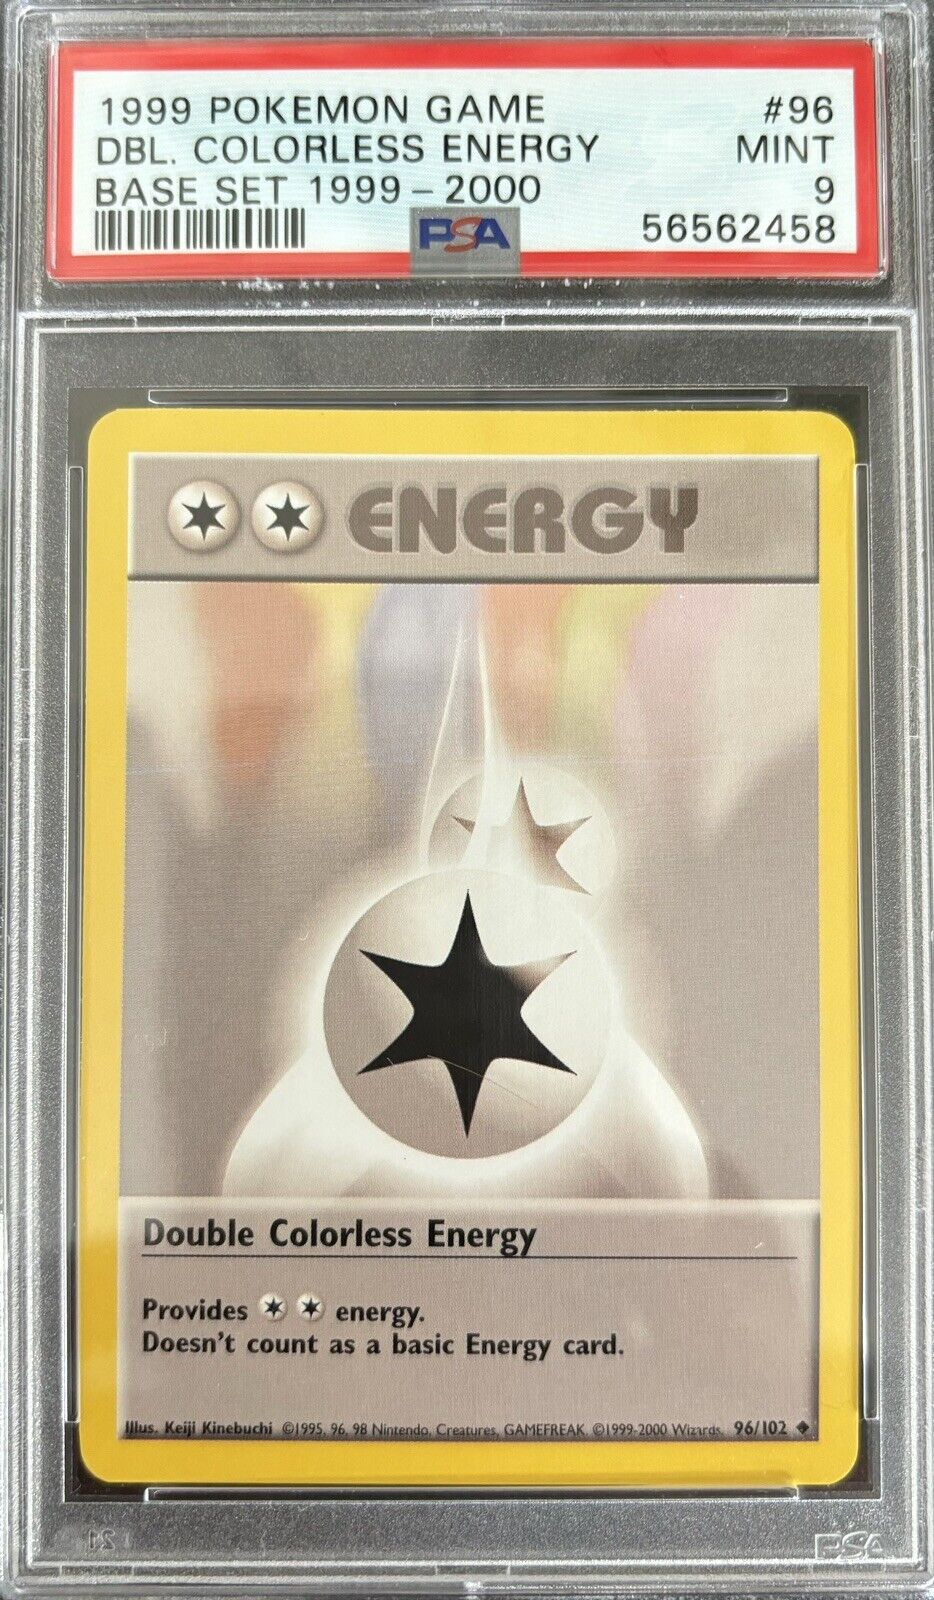 Double Colorless Energy Base Set 96/102 - 4TH PRINT ©️ 1999 - 2000 PSA 9